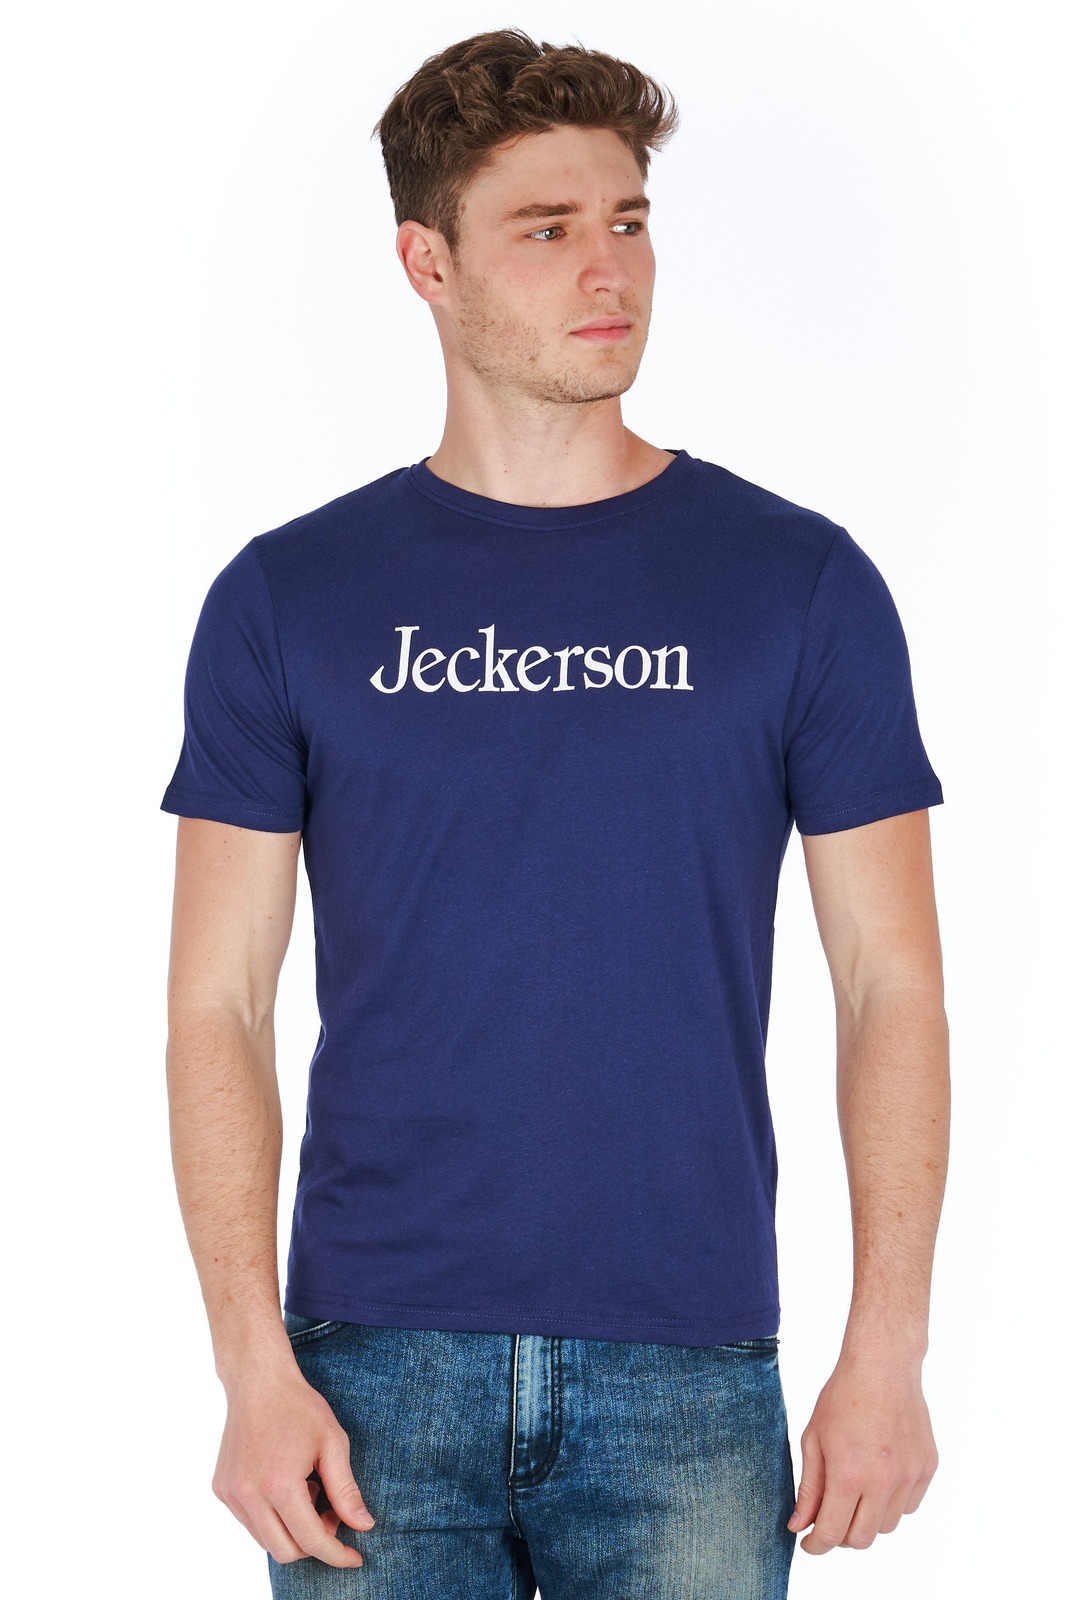 Jeckerson Blue T-shirts for Men - CLASSIC